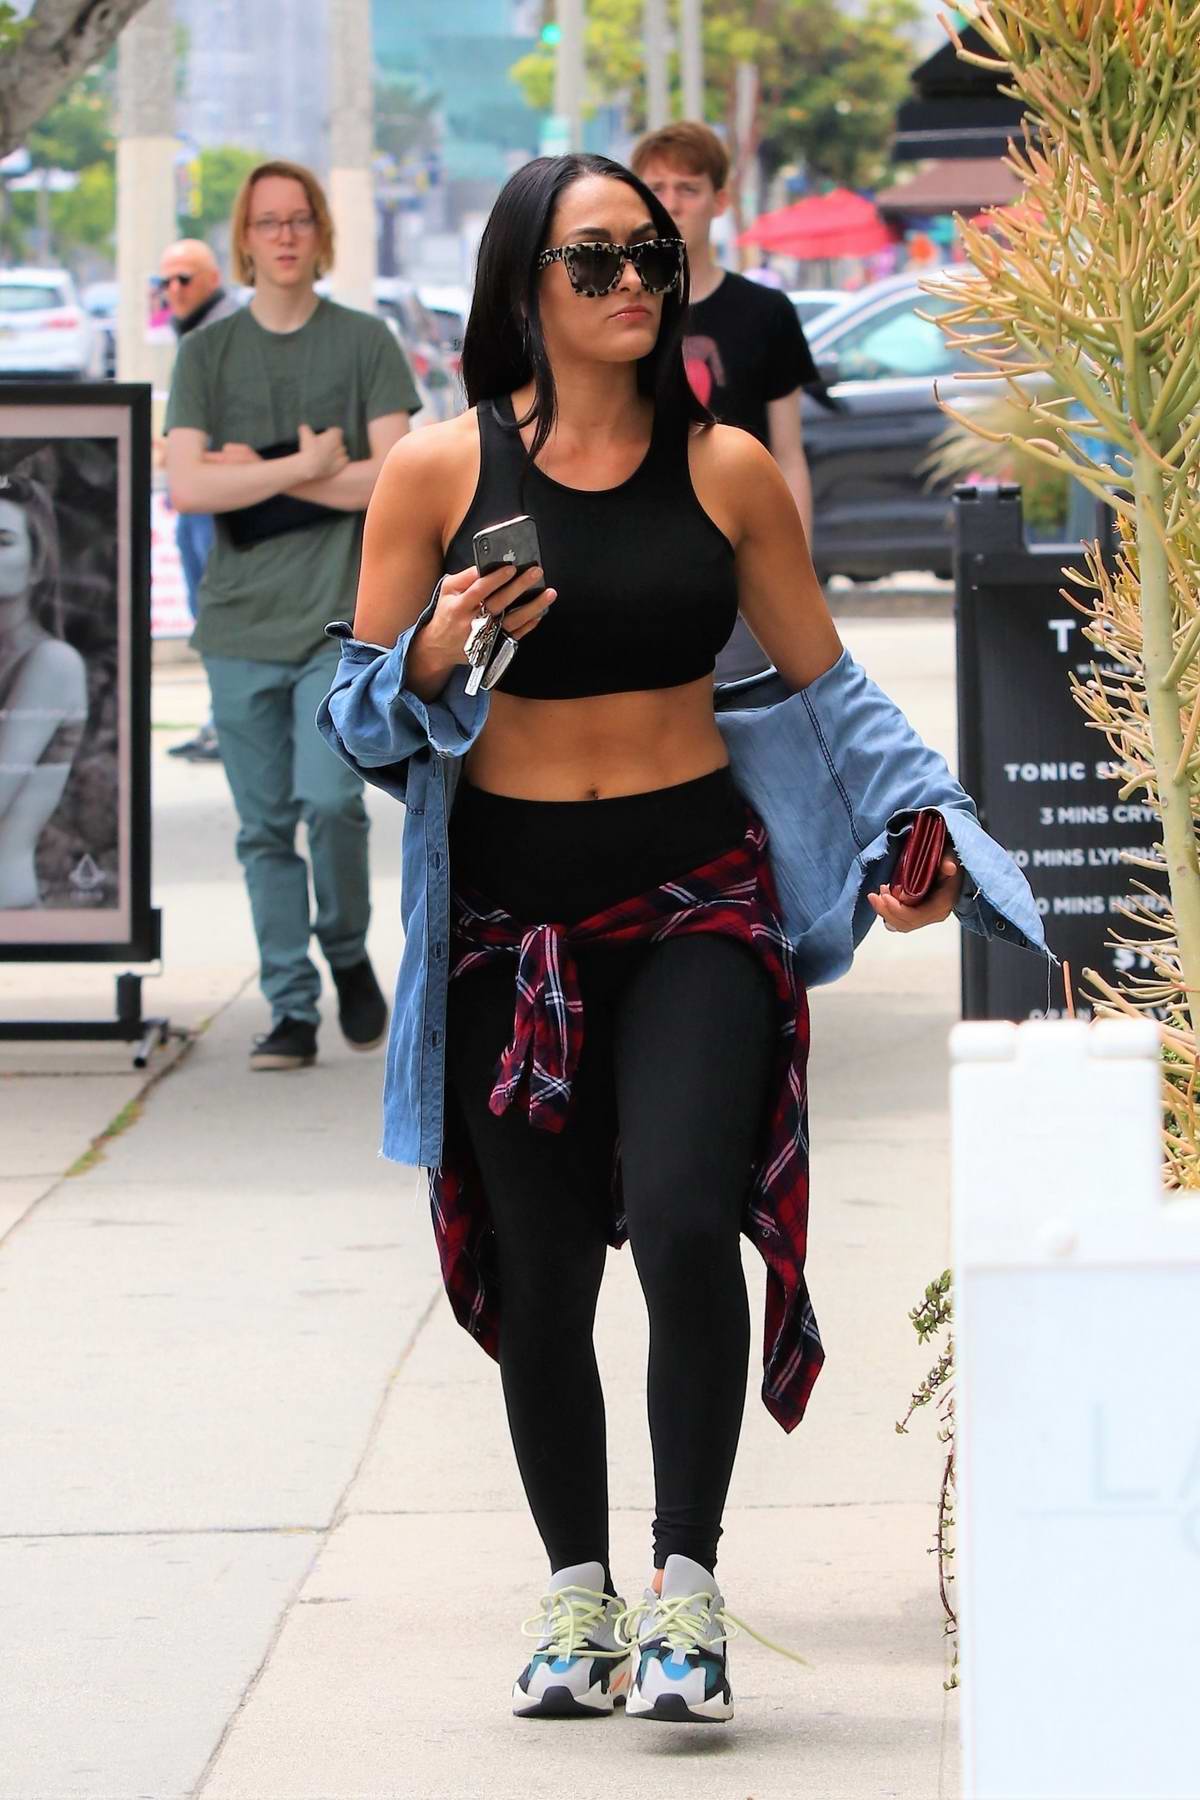 Nikki Bella's Black Crop Top & Leggings While Shopping In LA